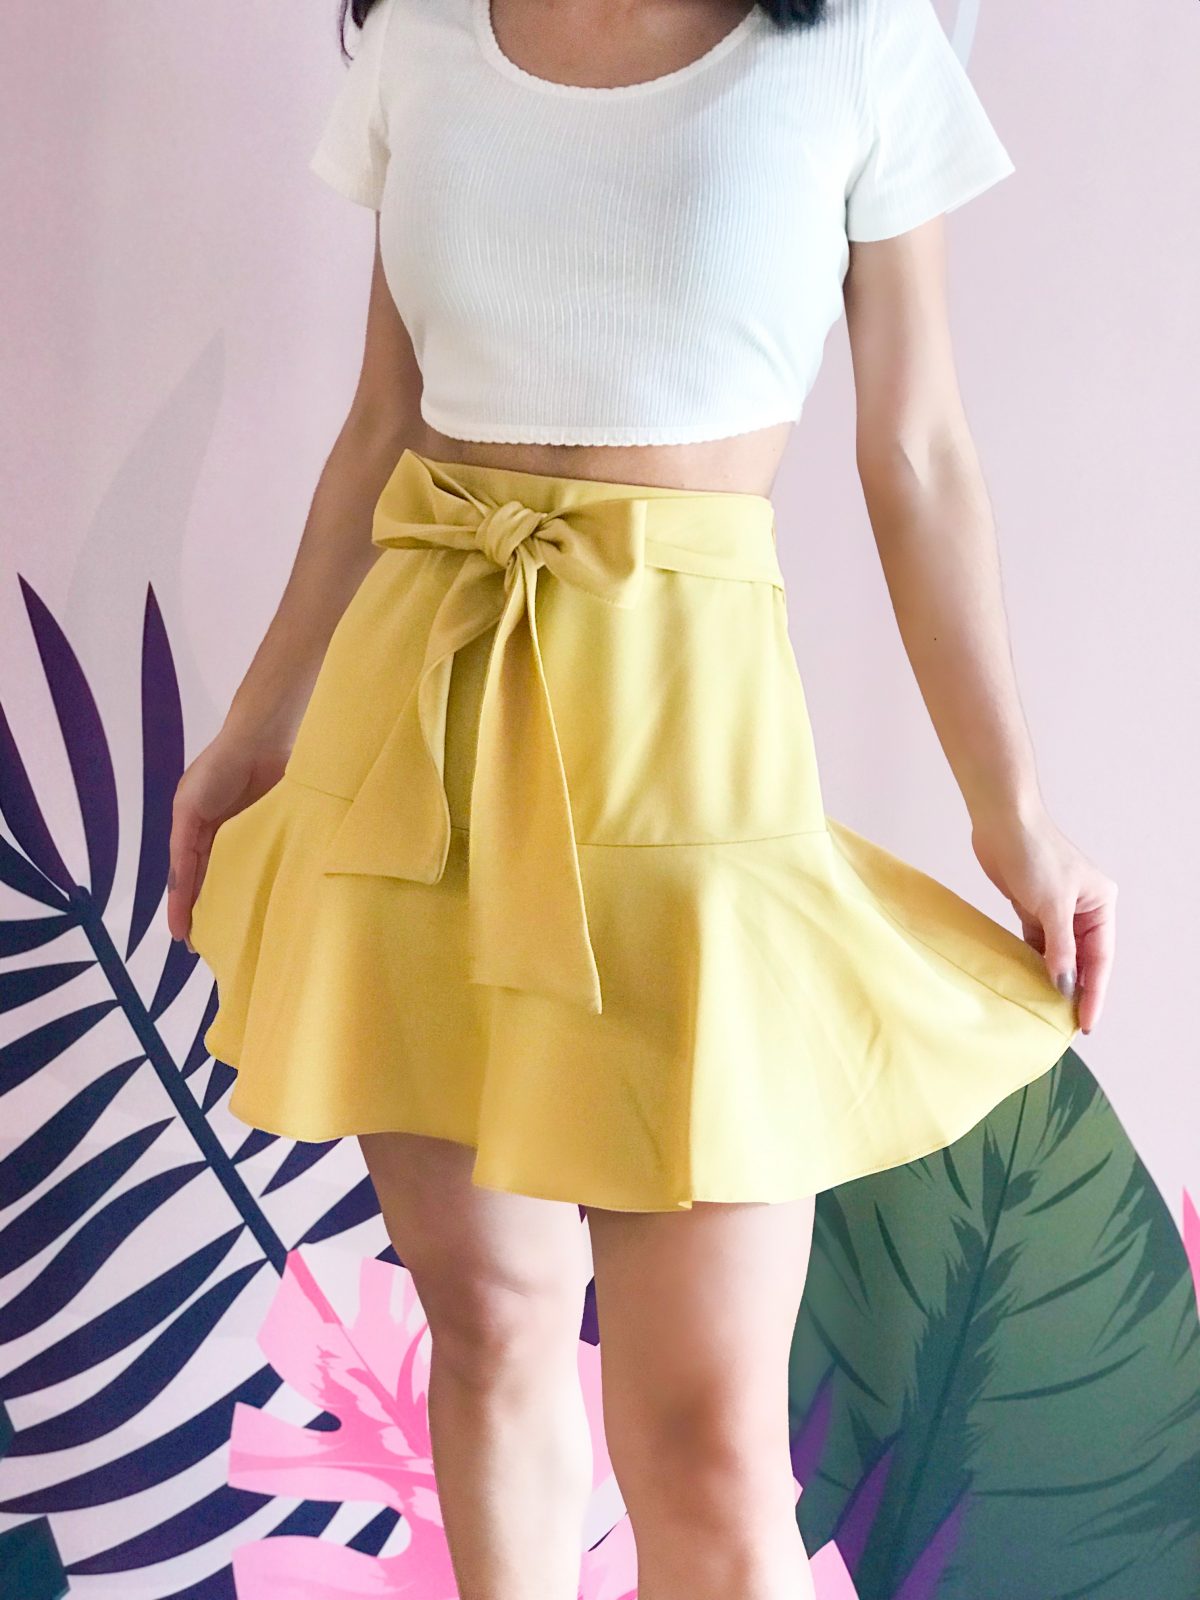 skort o falda short amarillo - ecuador - ropa gallardo